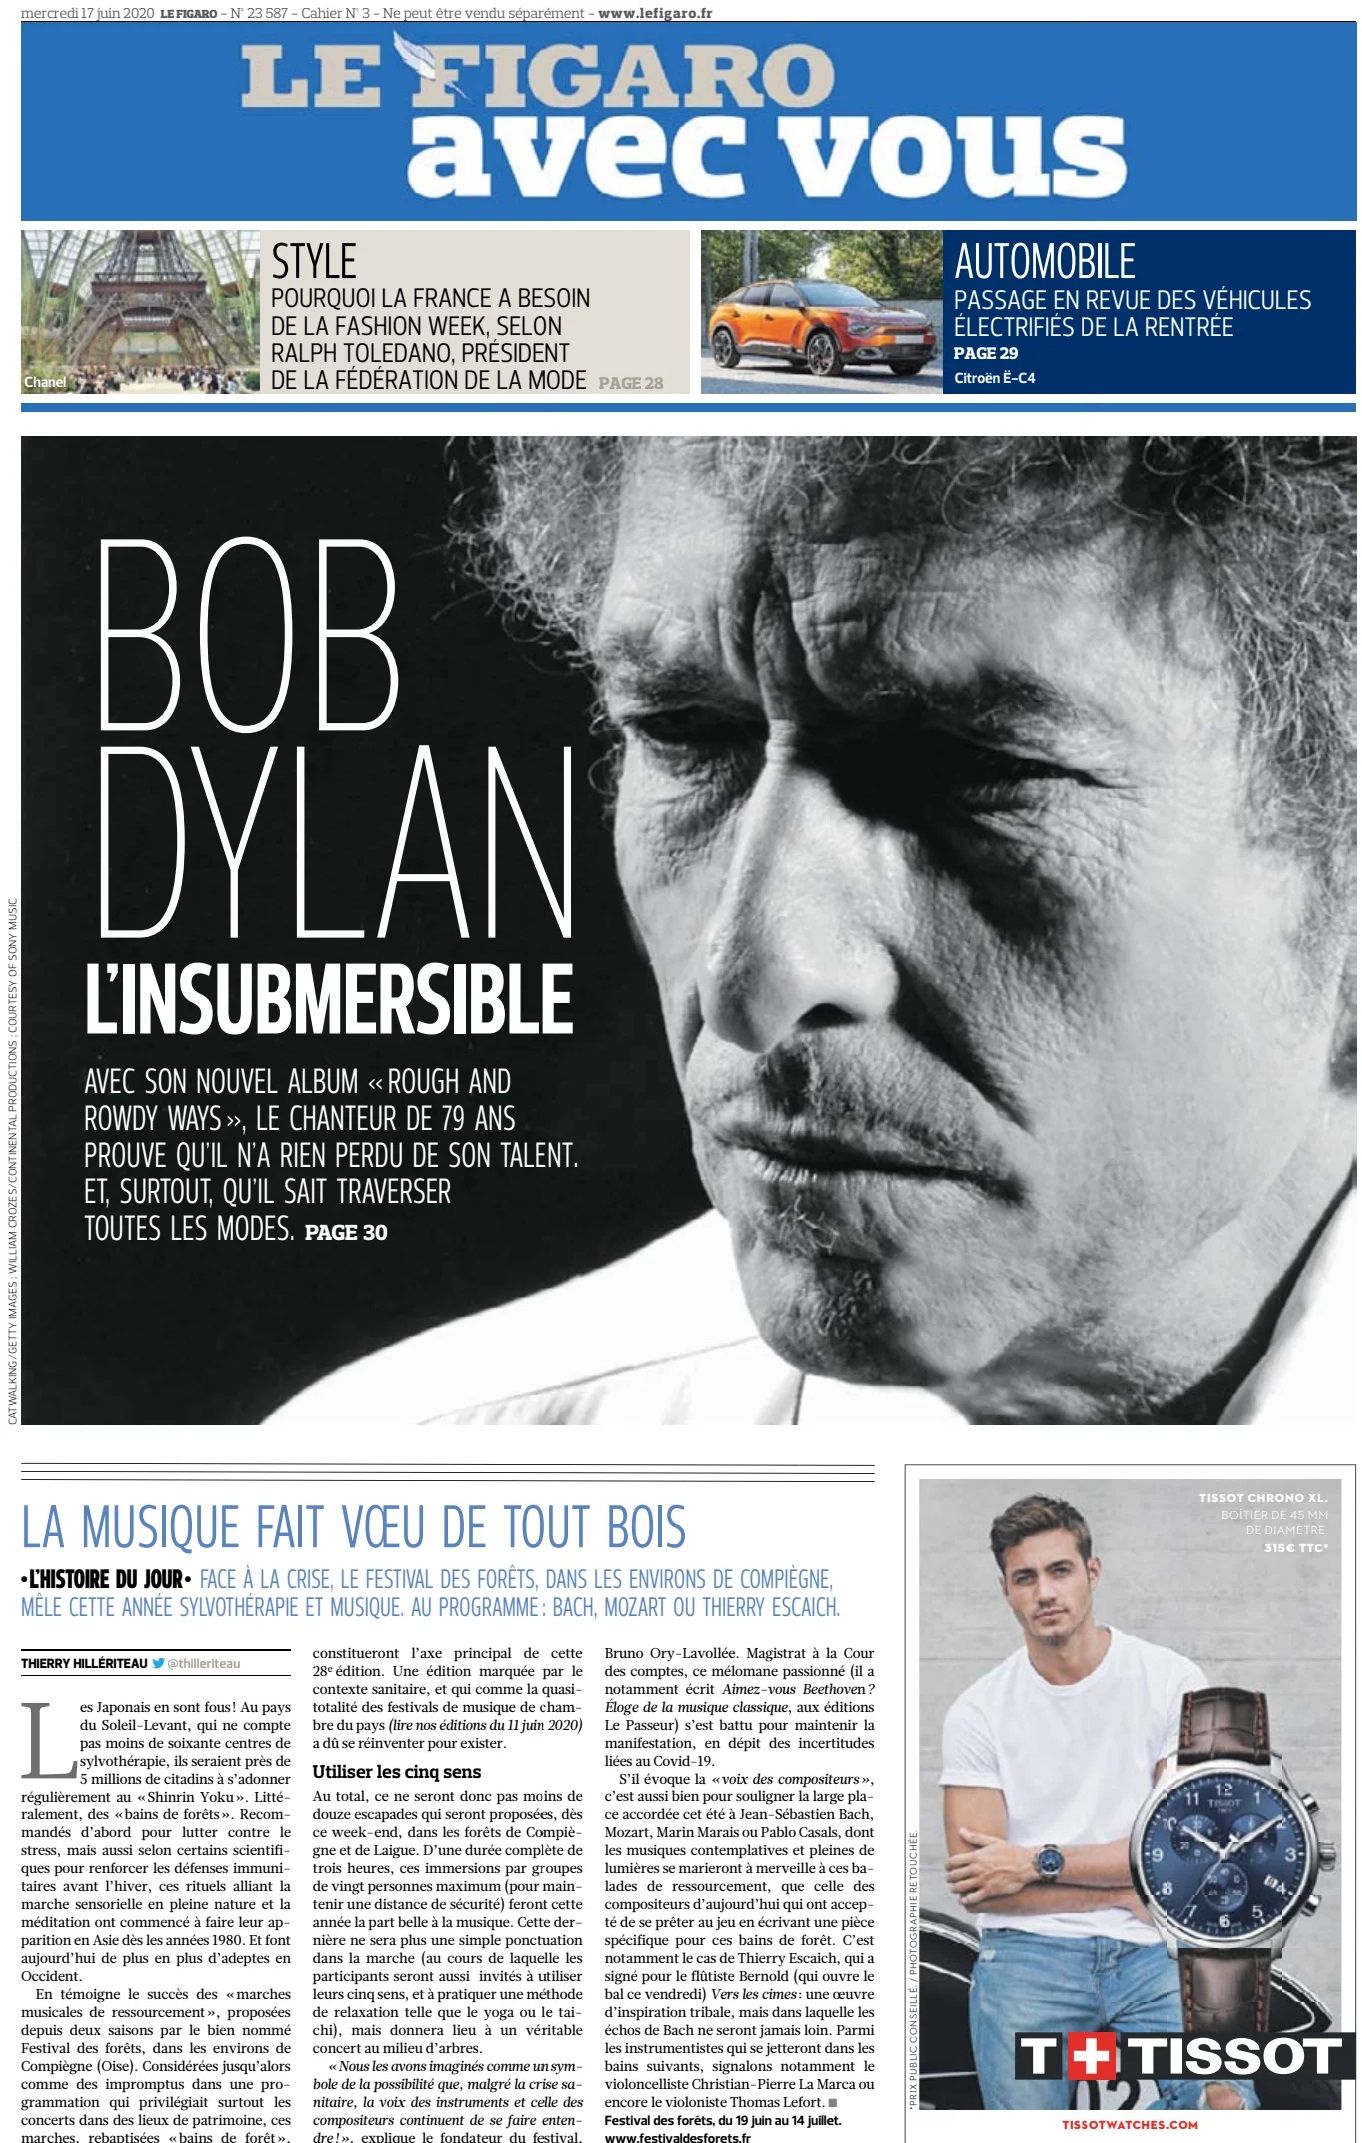 le figaro avec vous 2020 magazine Bob Dylan front cover